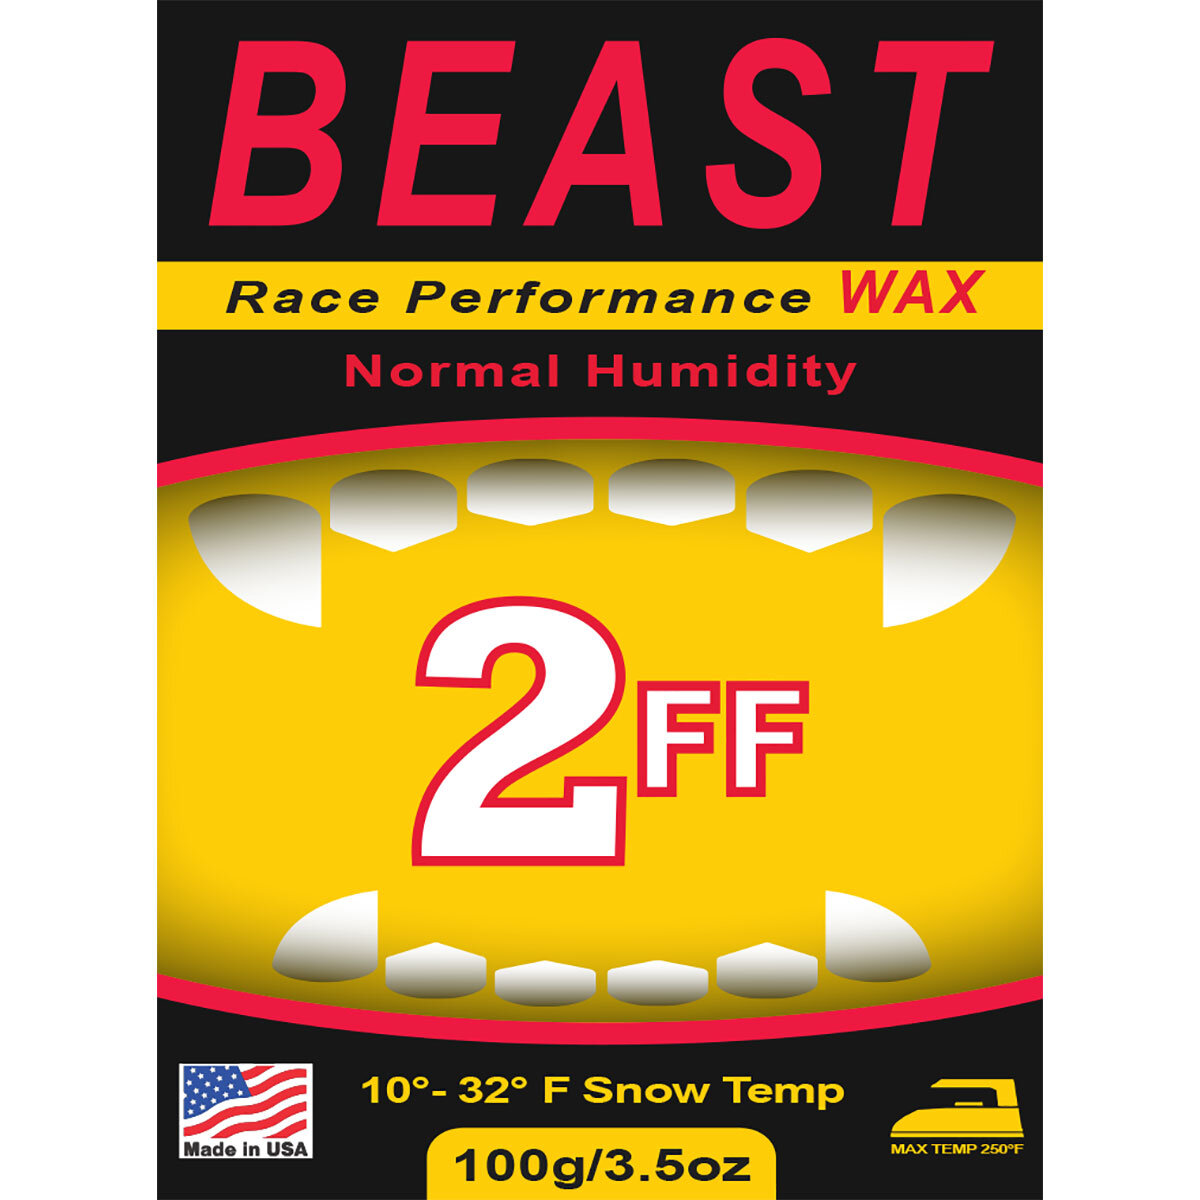 BEAST 2FF Race Wax